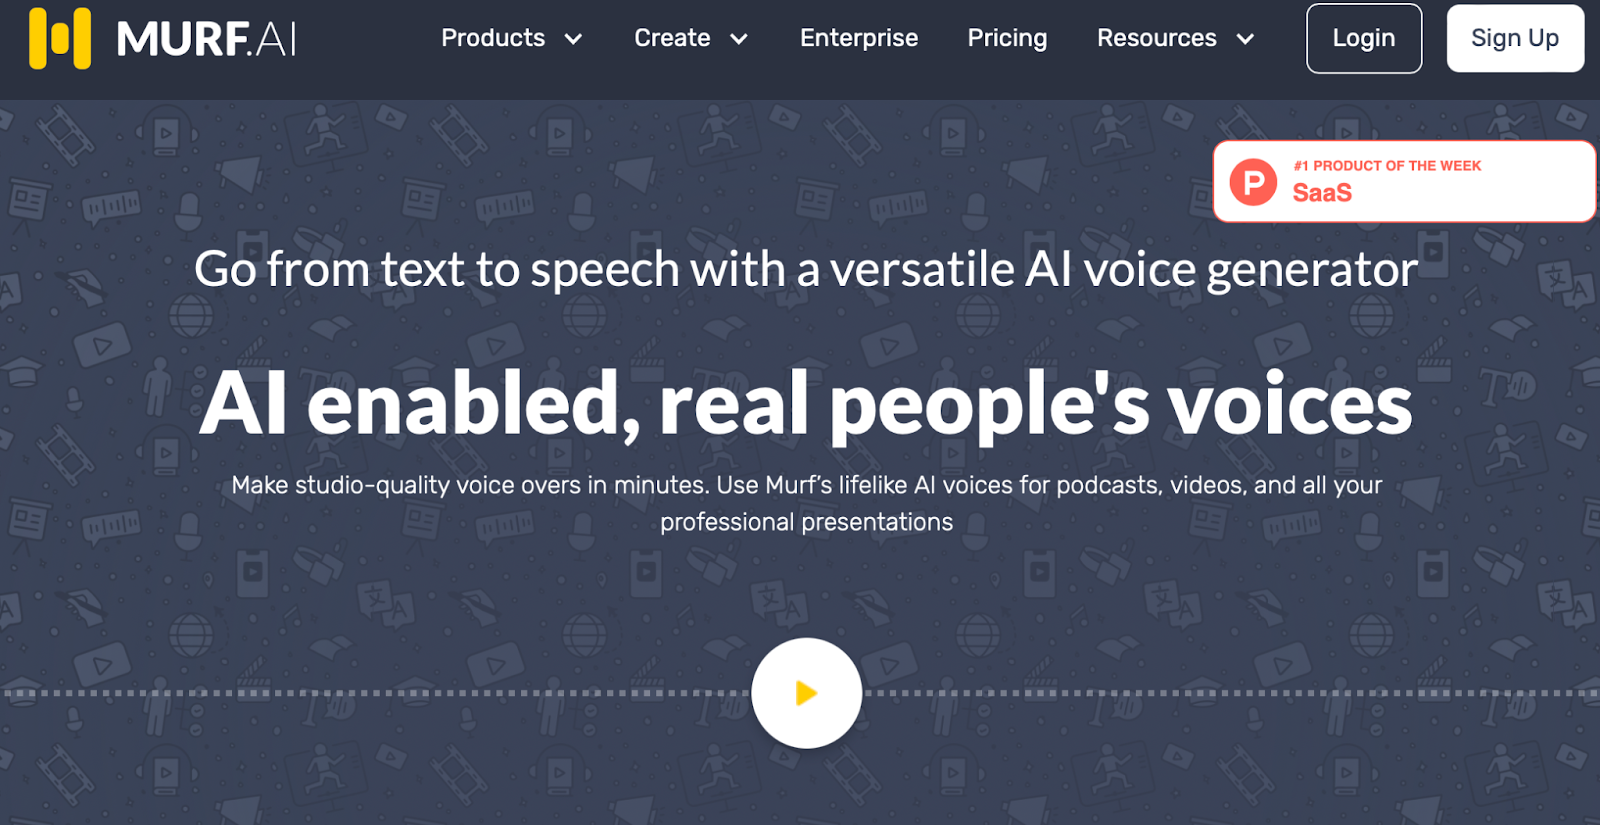 MURF.ai AI platform for realistic voice generation